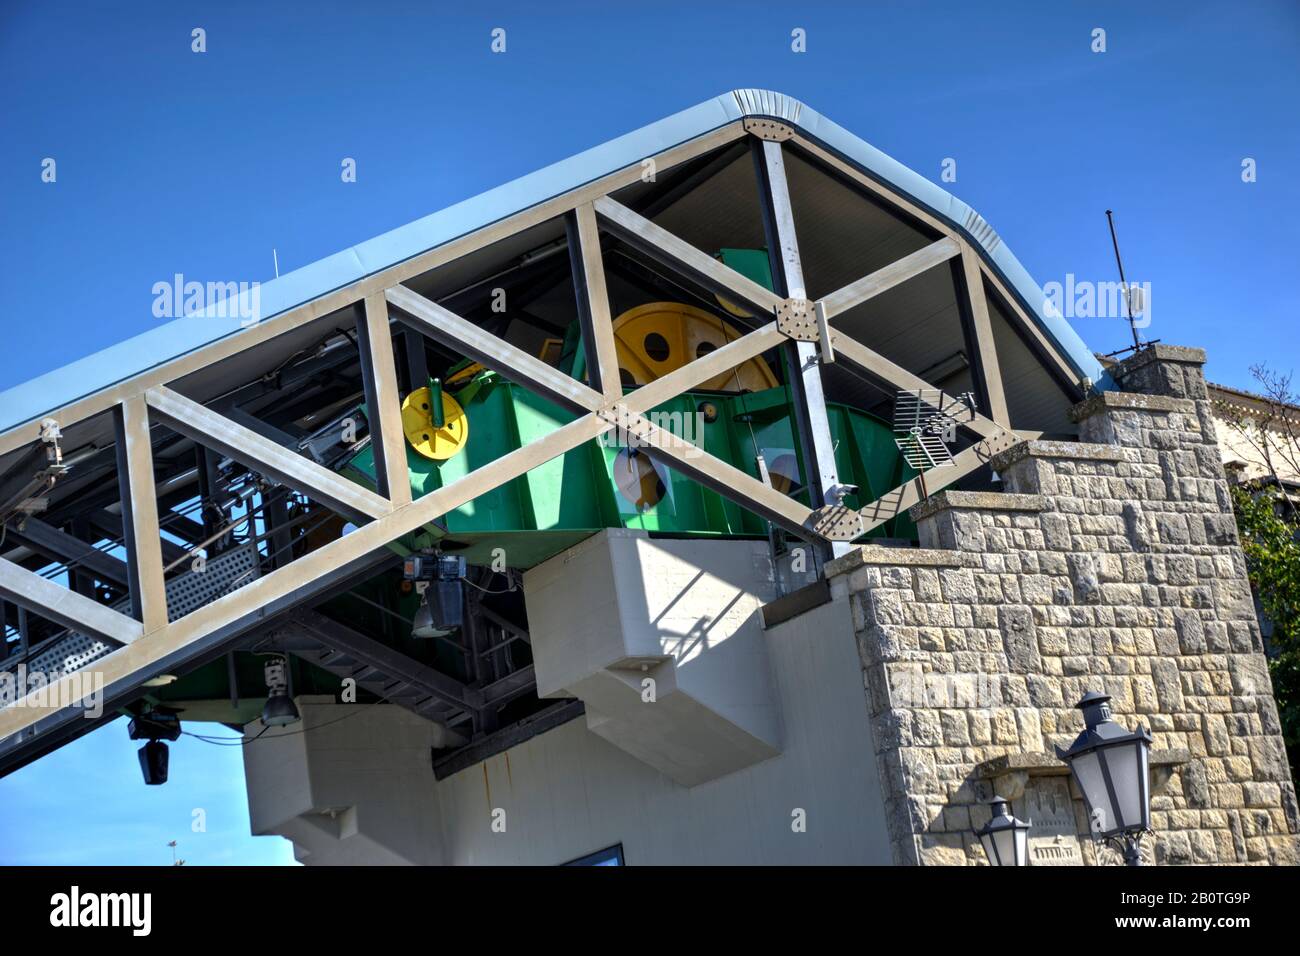 San Marino, San Marino - October 19, 2019: Cable car drive mechanism and housing Stock Photo